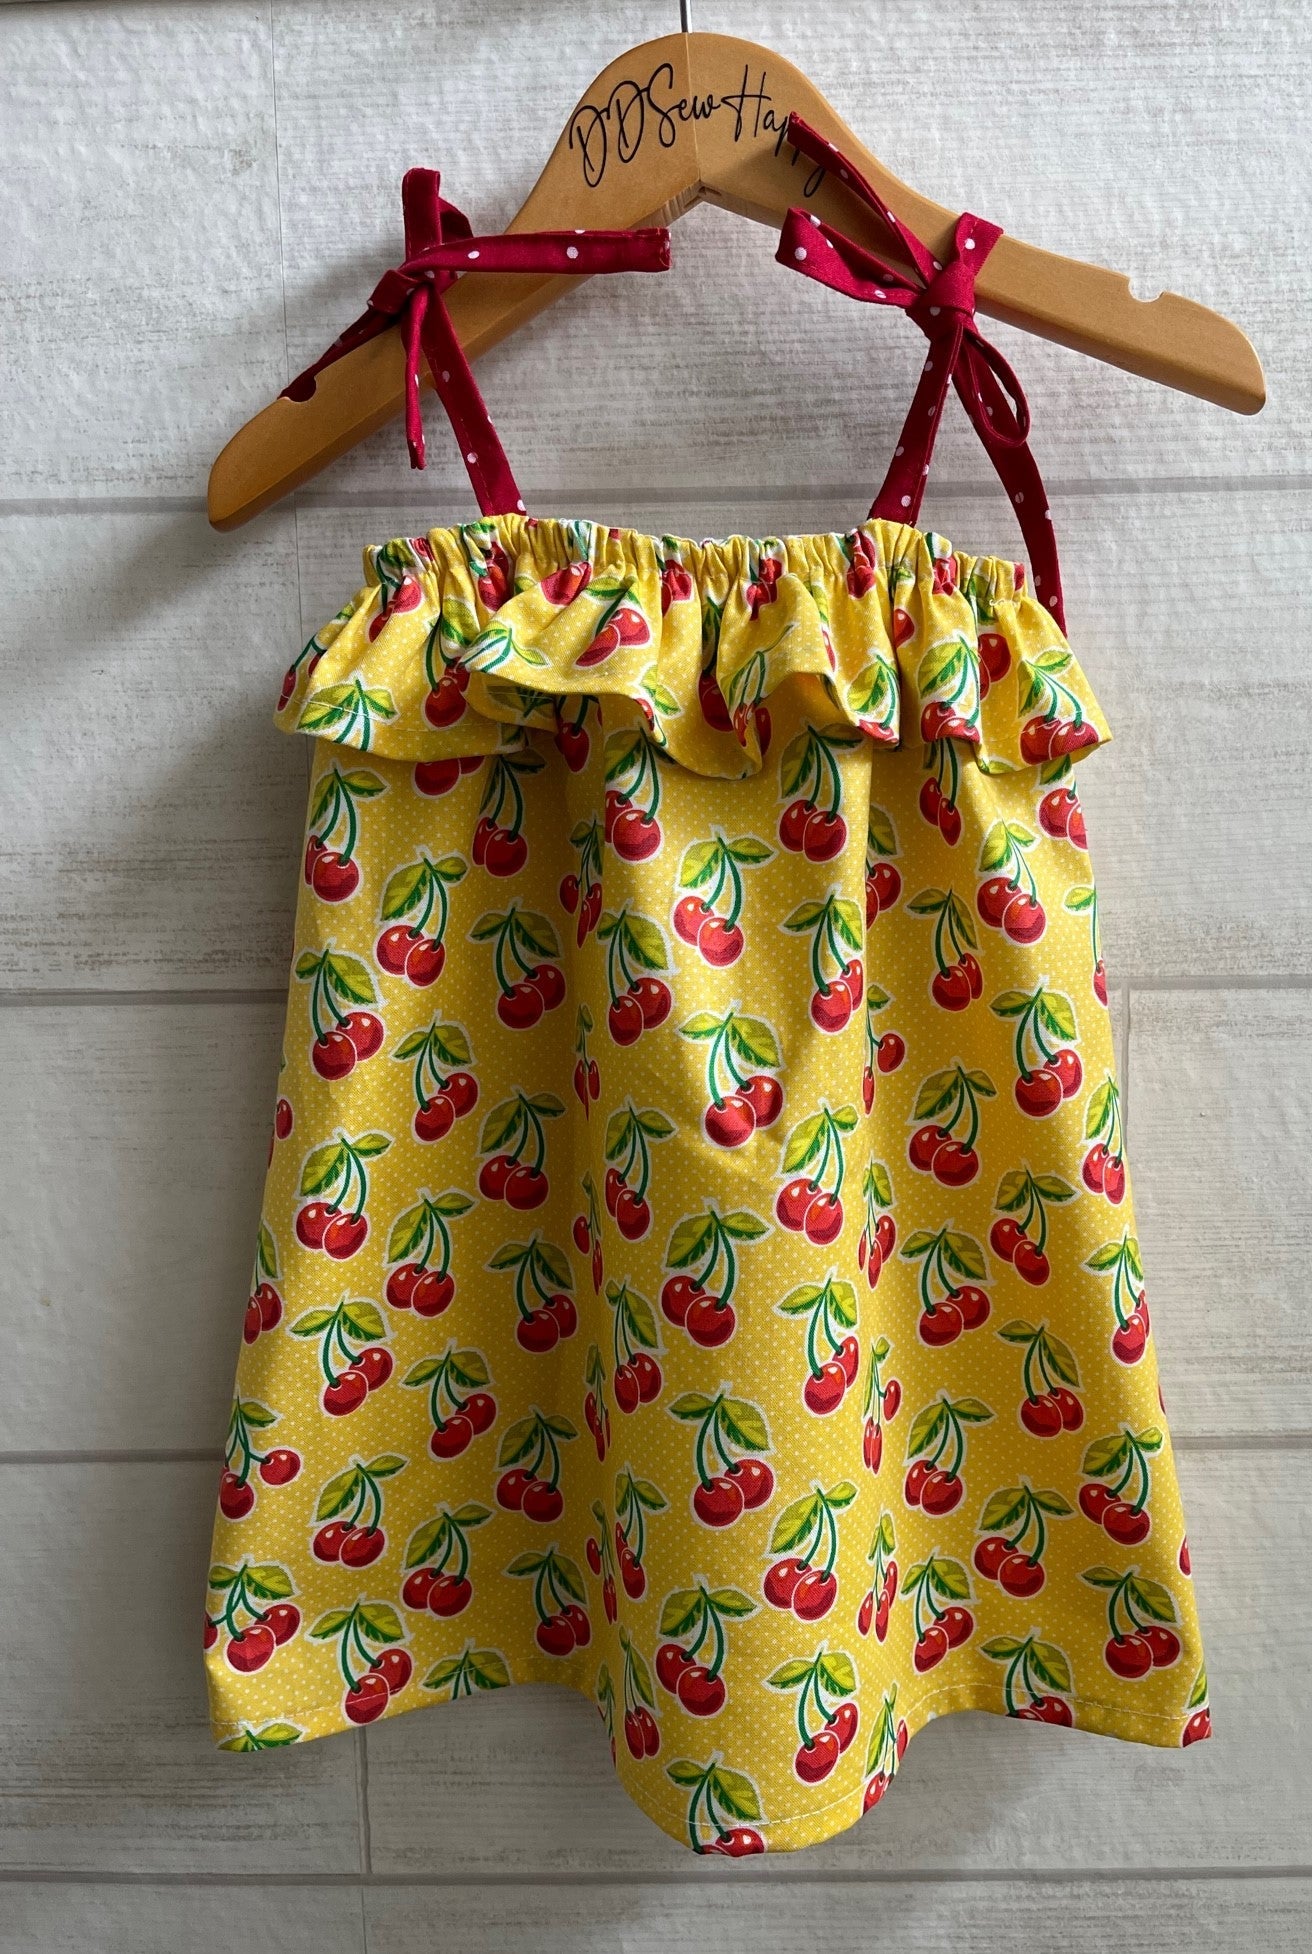 Girls Infant Toddler Cherry Sundress Tie Straps Ruffle Top 